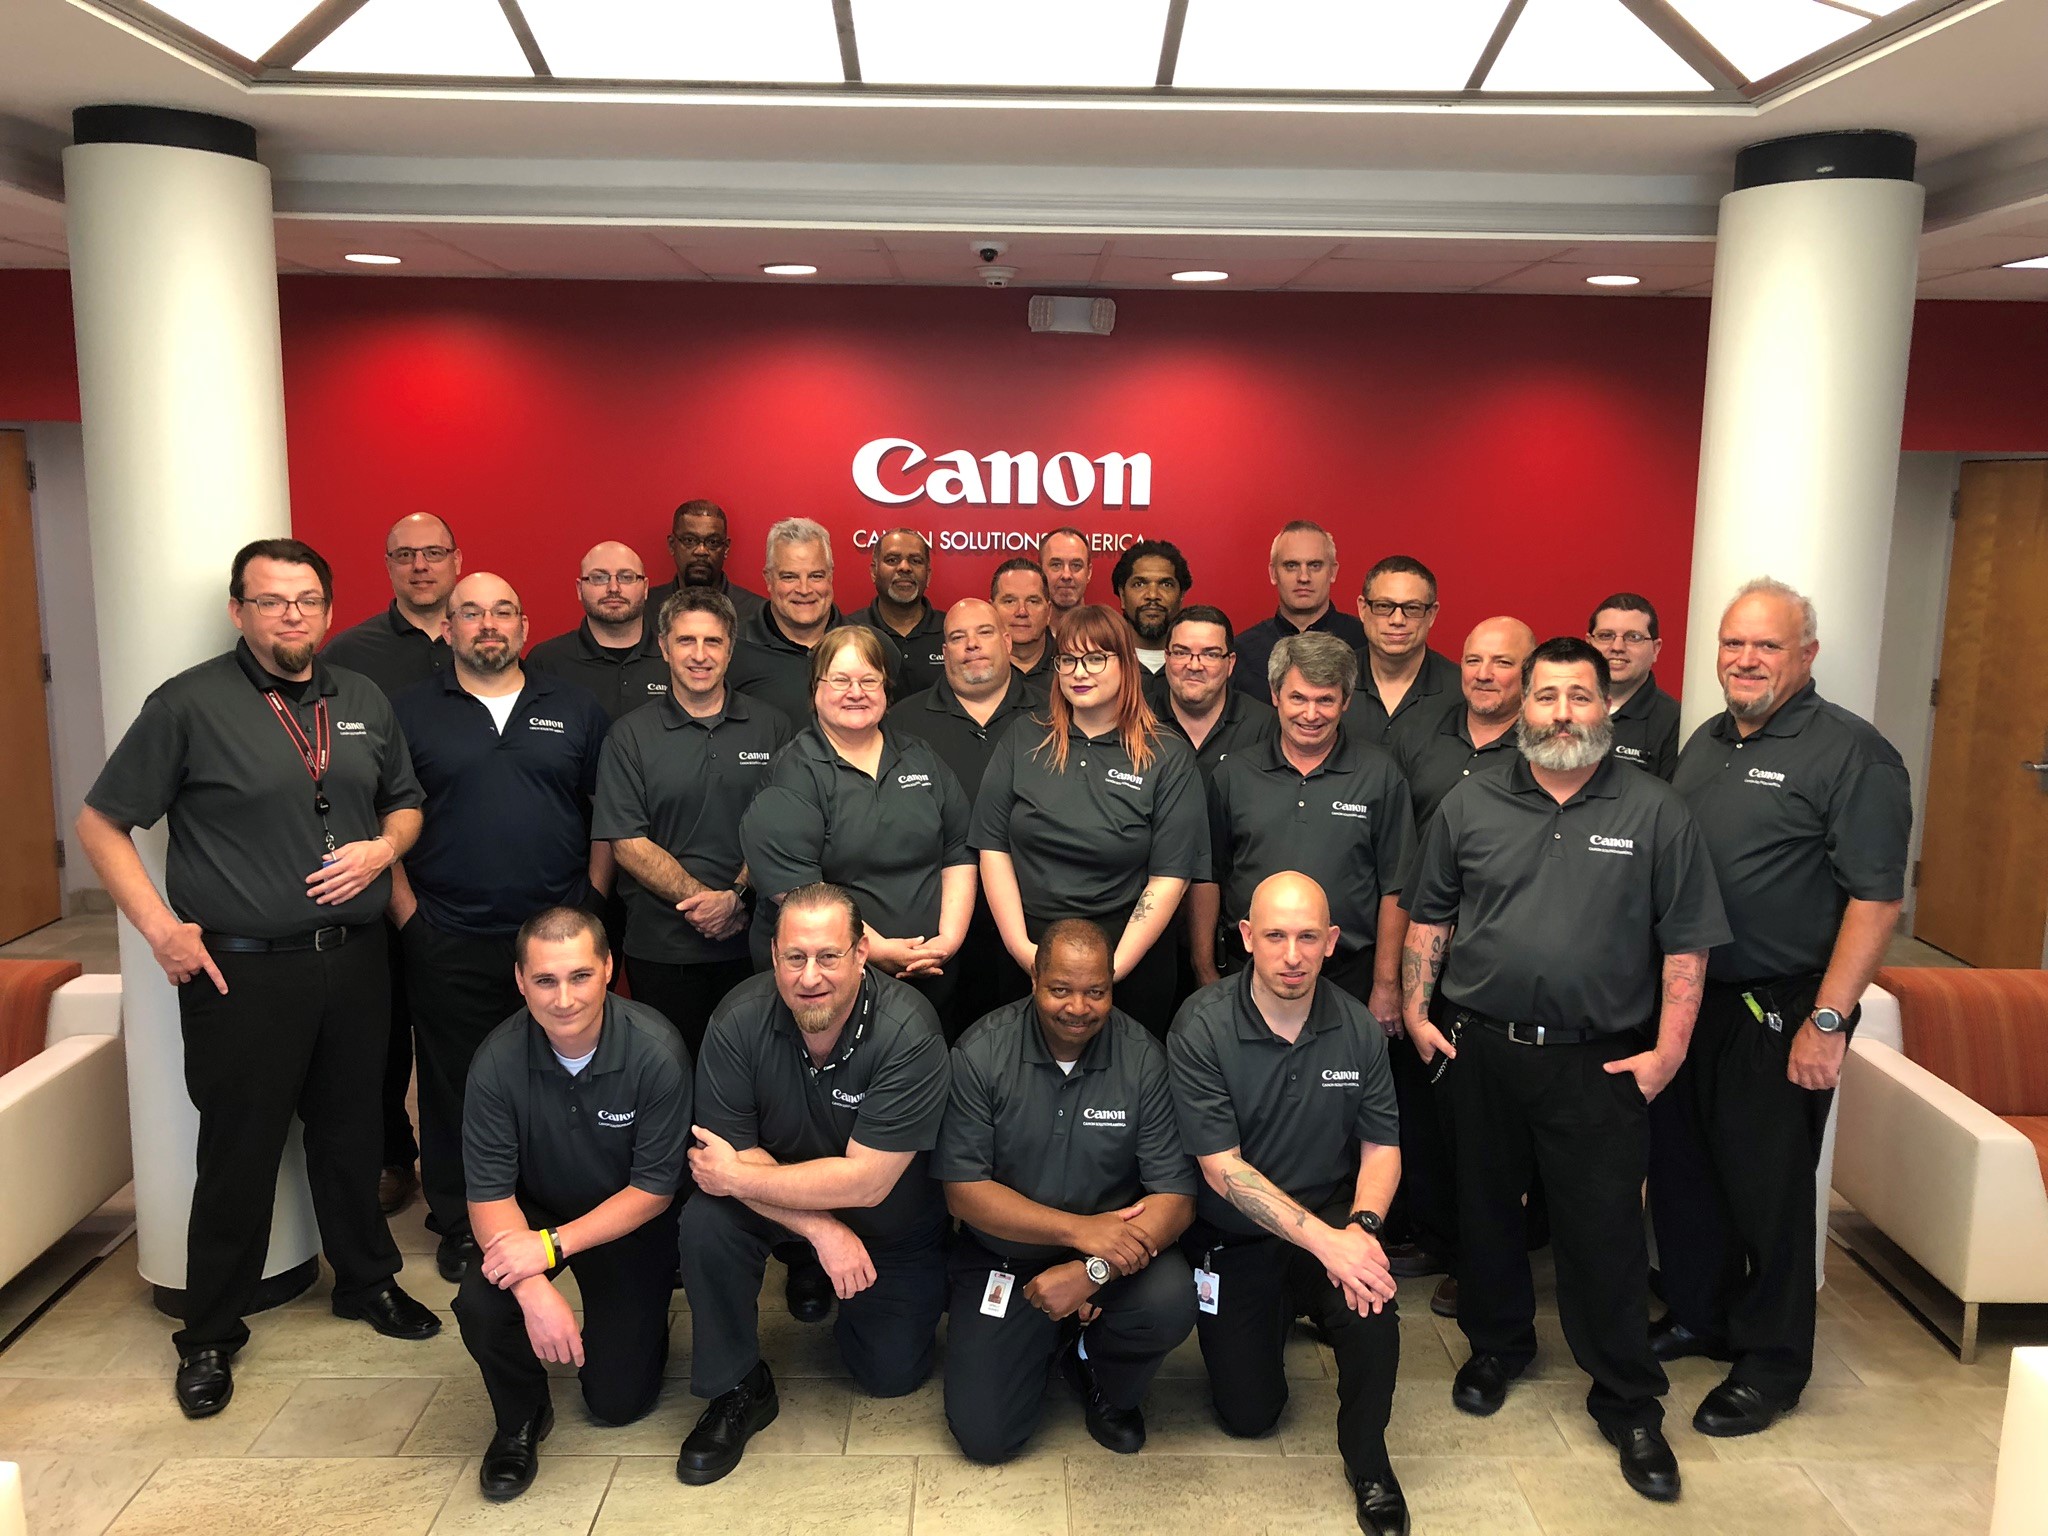 Canon Solutions America Professional Services Team in Burlington, NJ